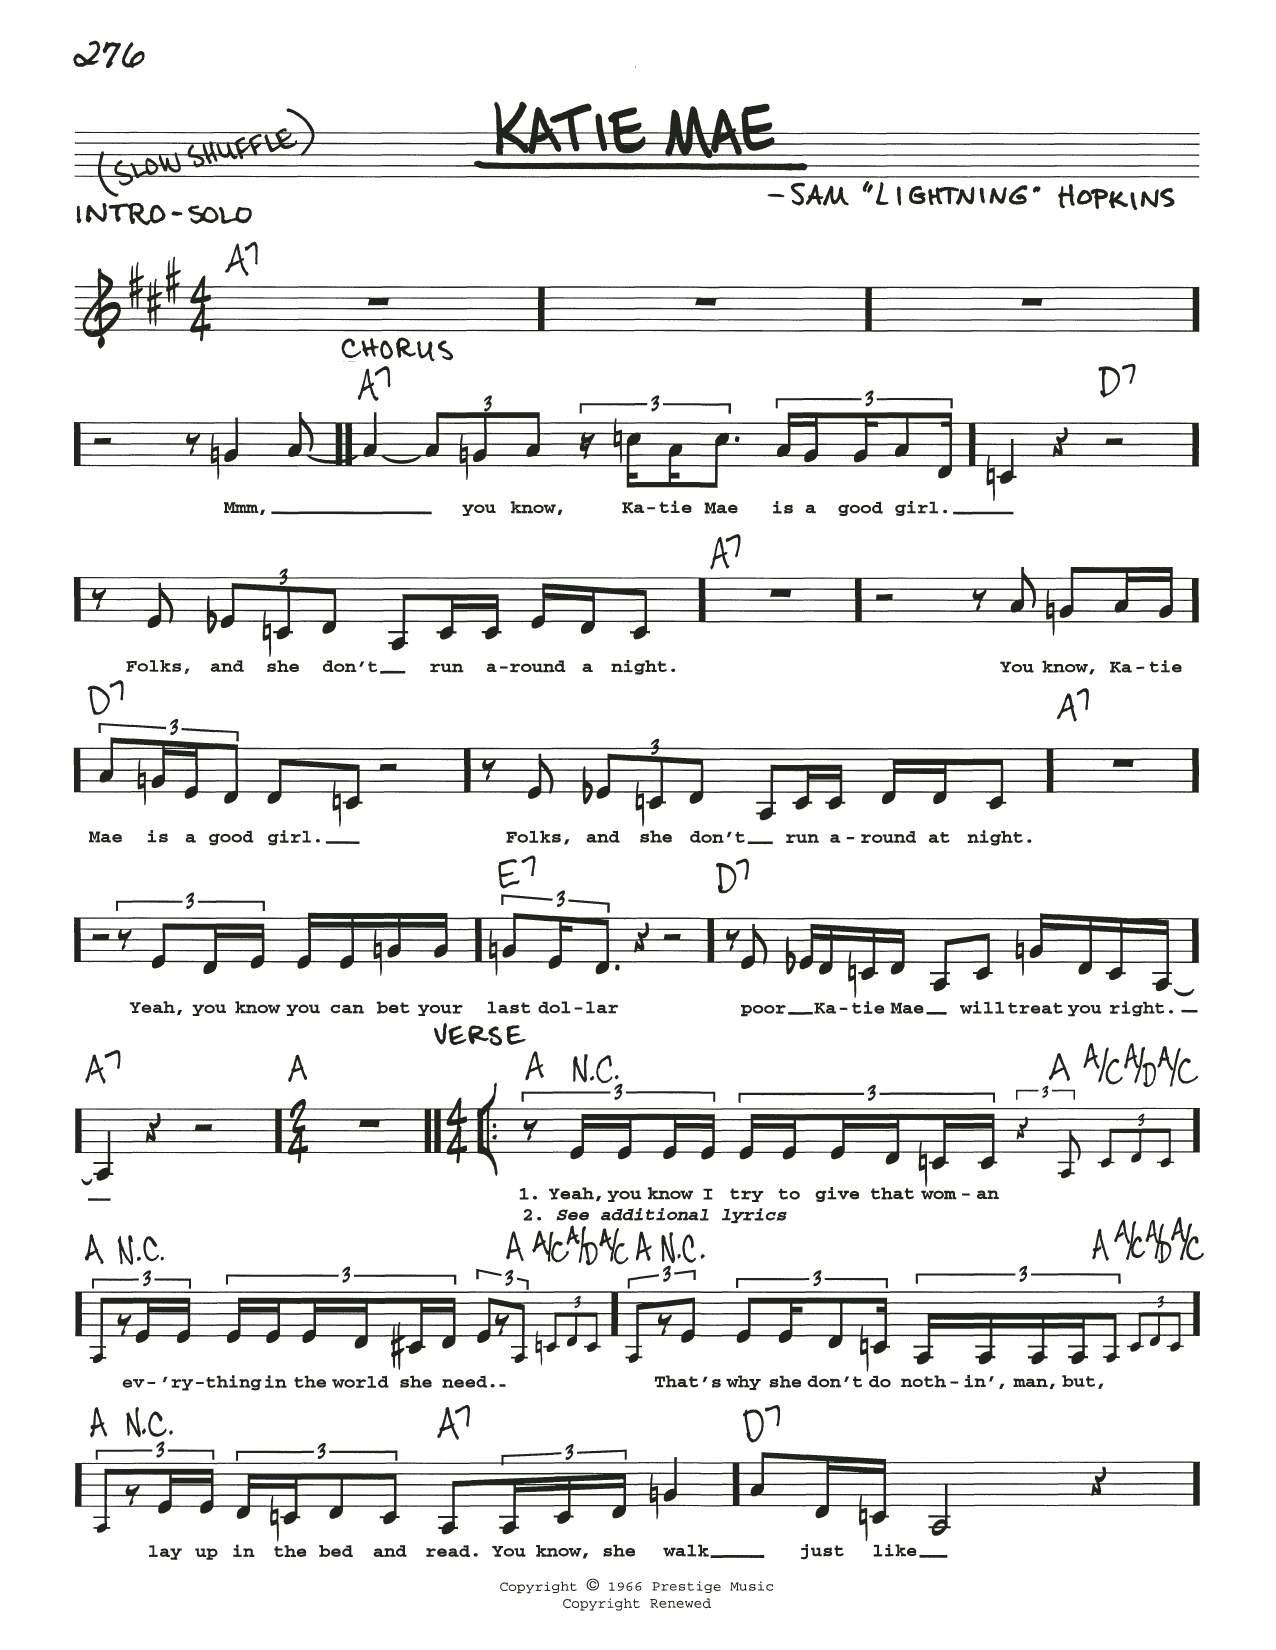 Lightnin' Hopkins Katie Mae Sheet Music Notes & Chords for Real Book – Melody, Lyrics & Chords - Download or Print PDF